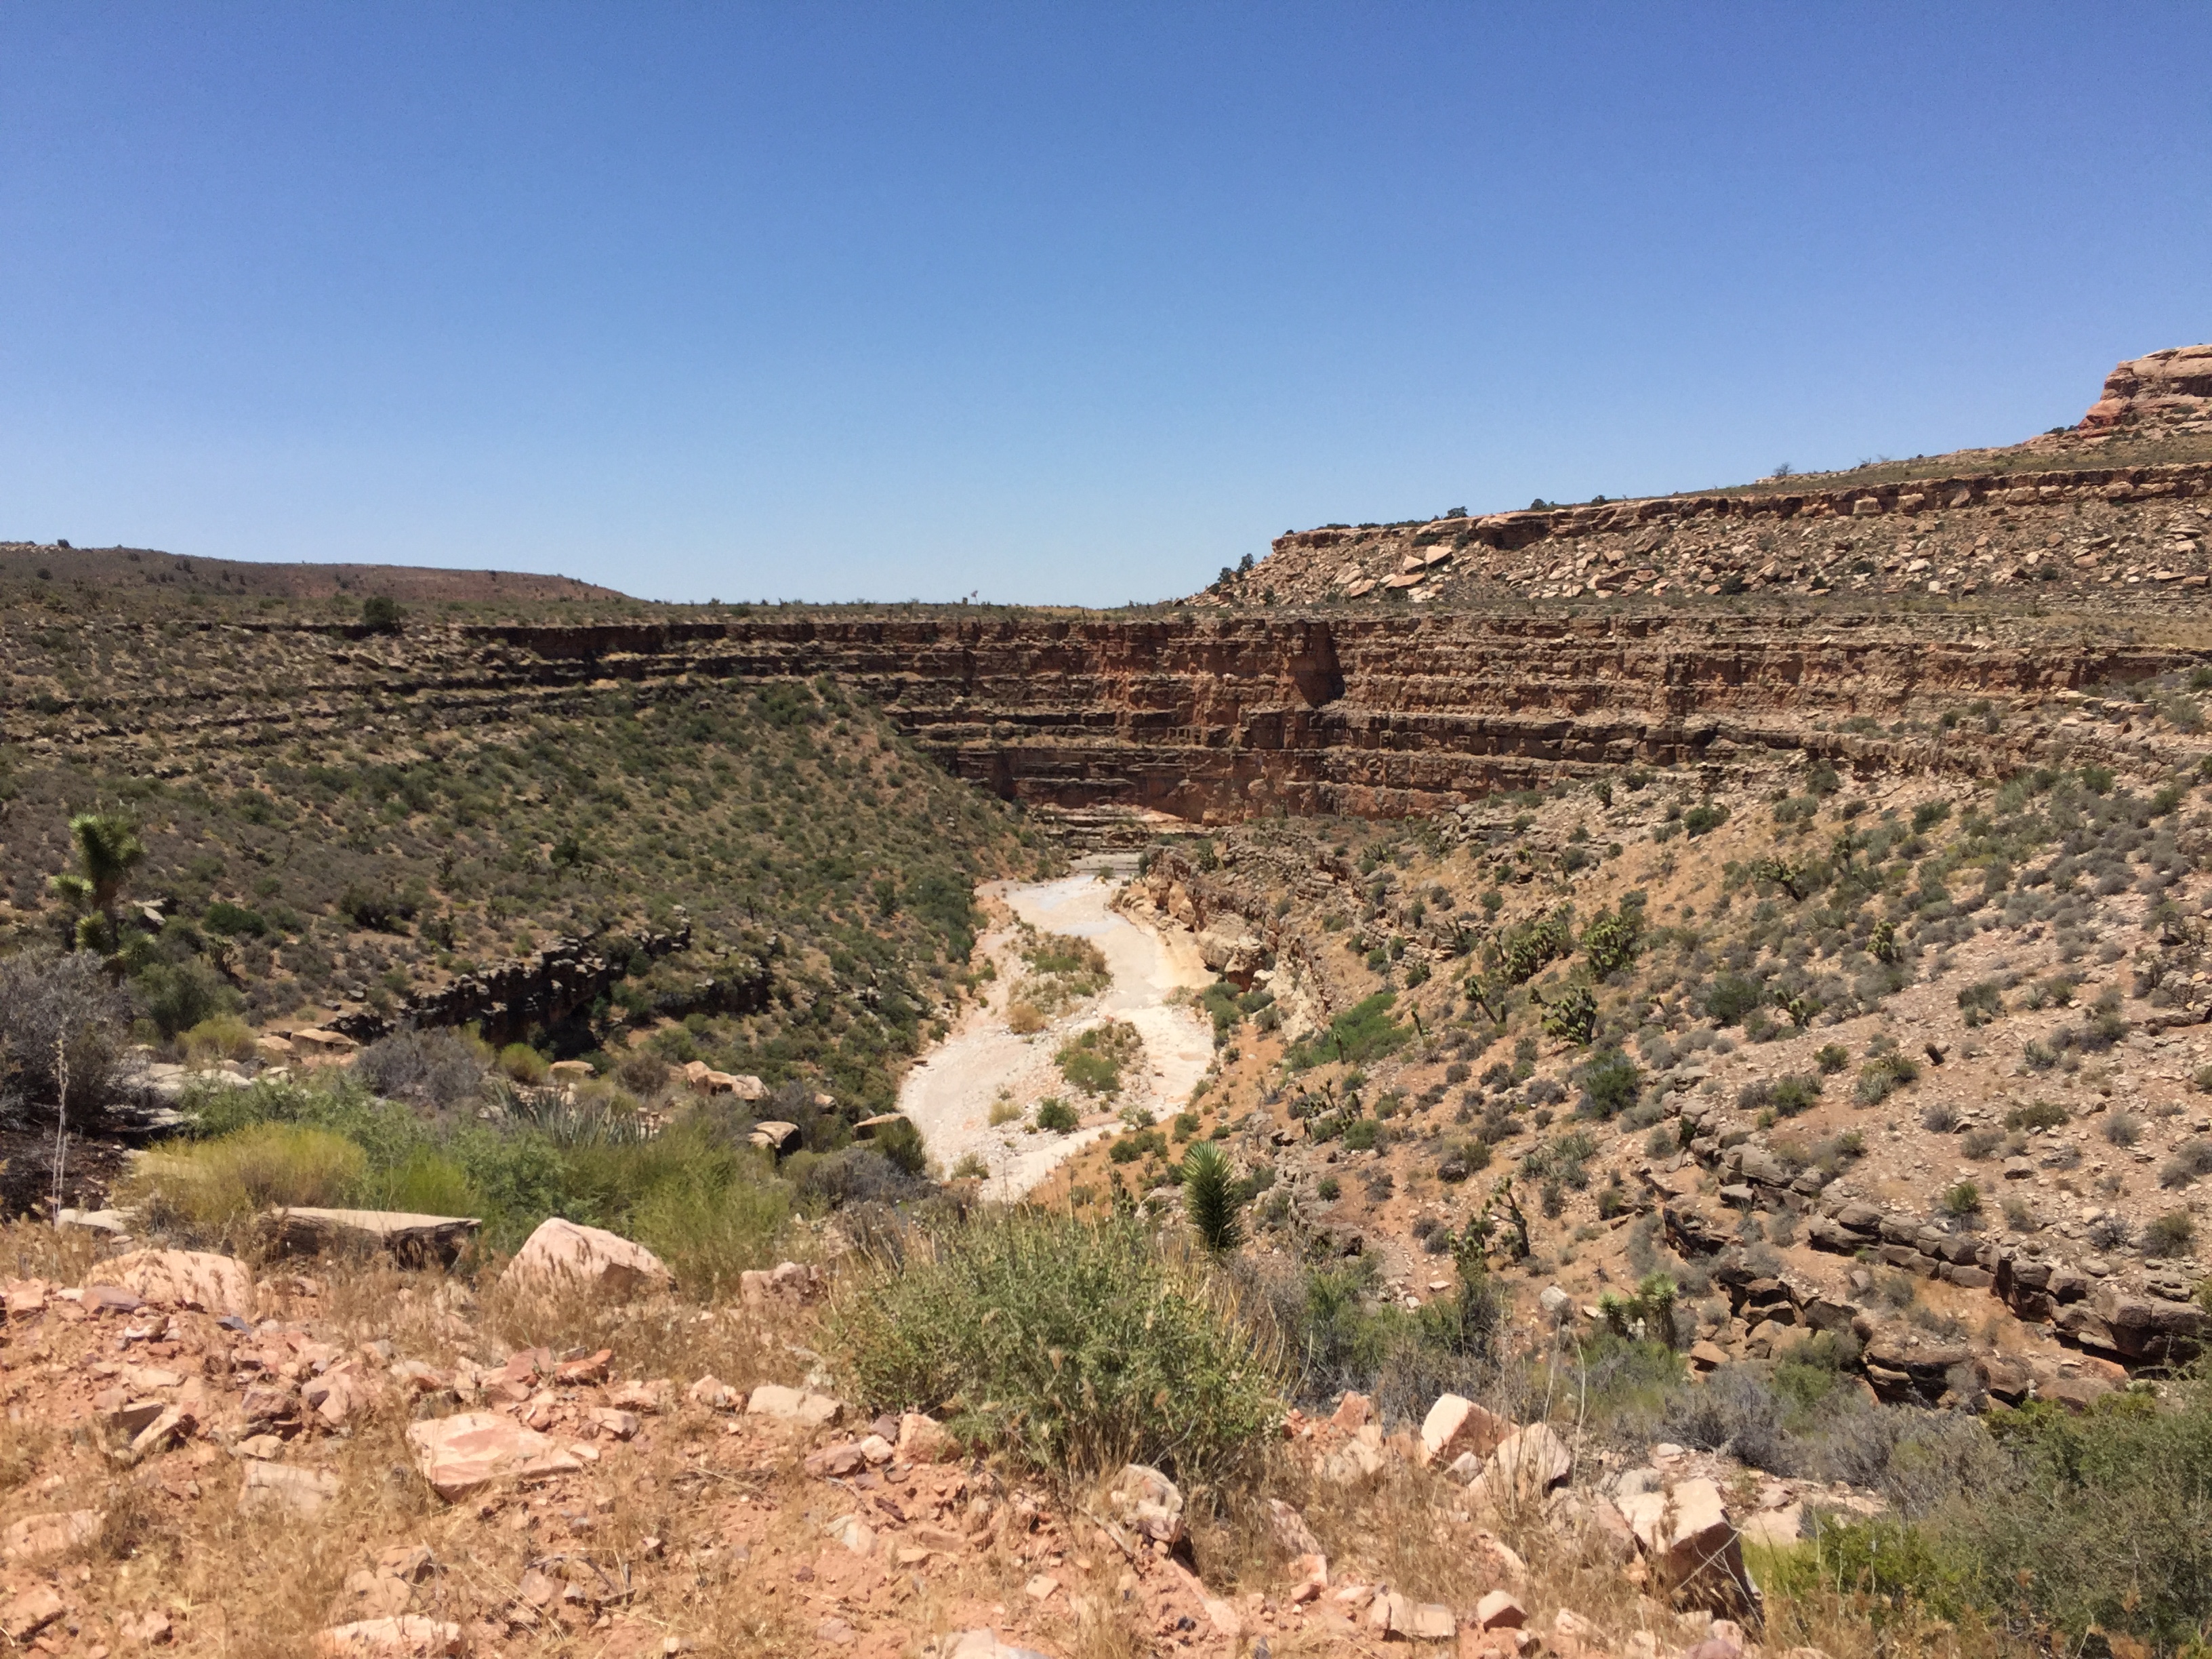 An interesting canyon on the Arizona Strip